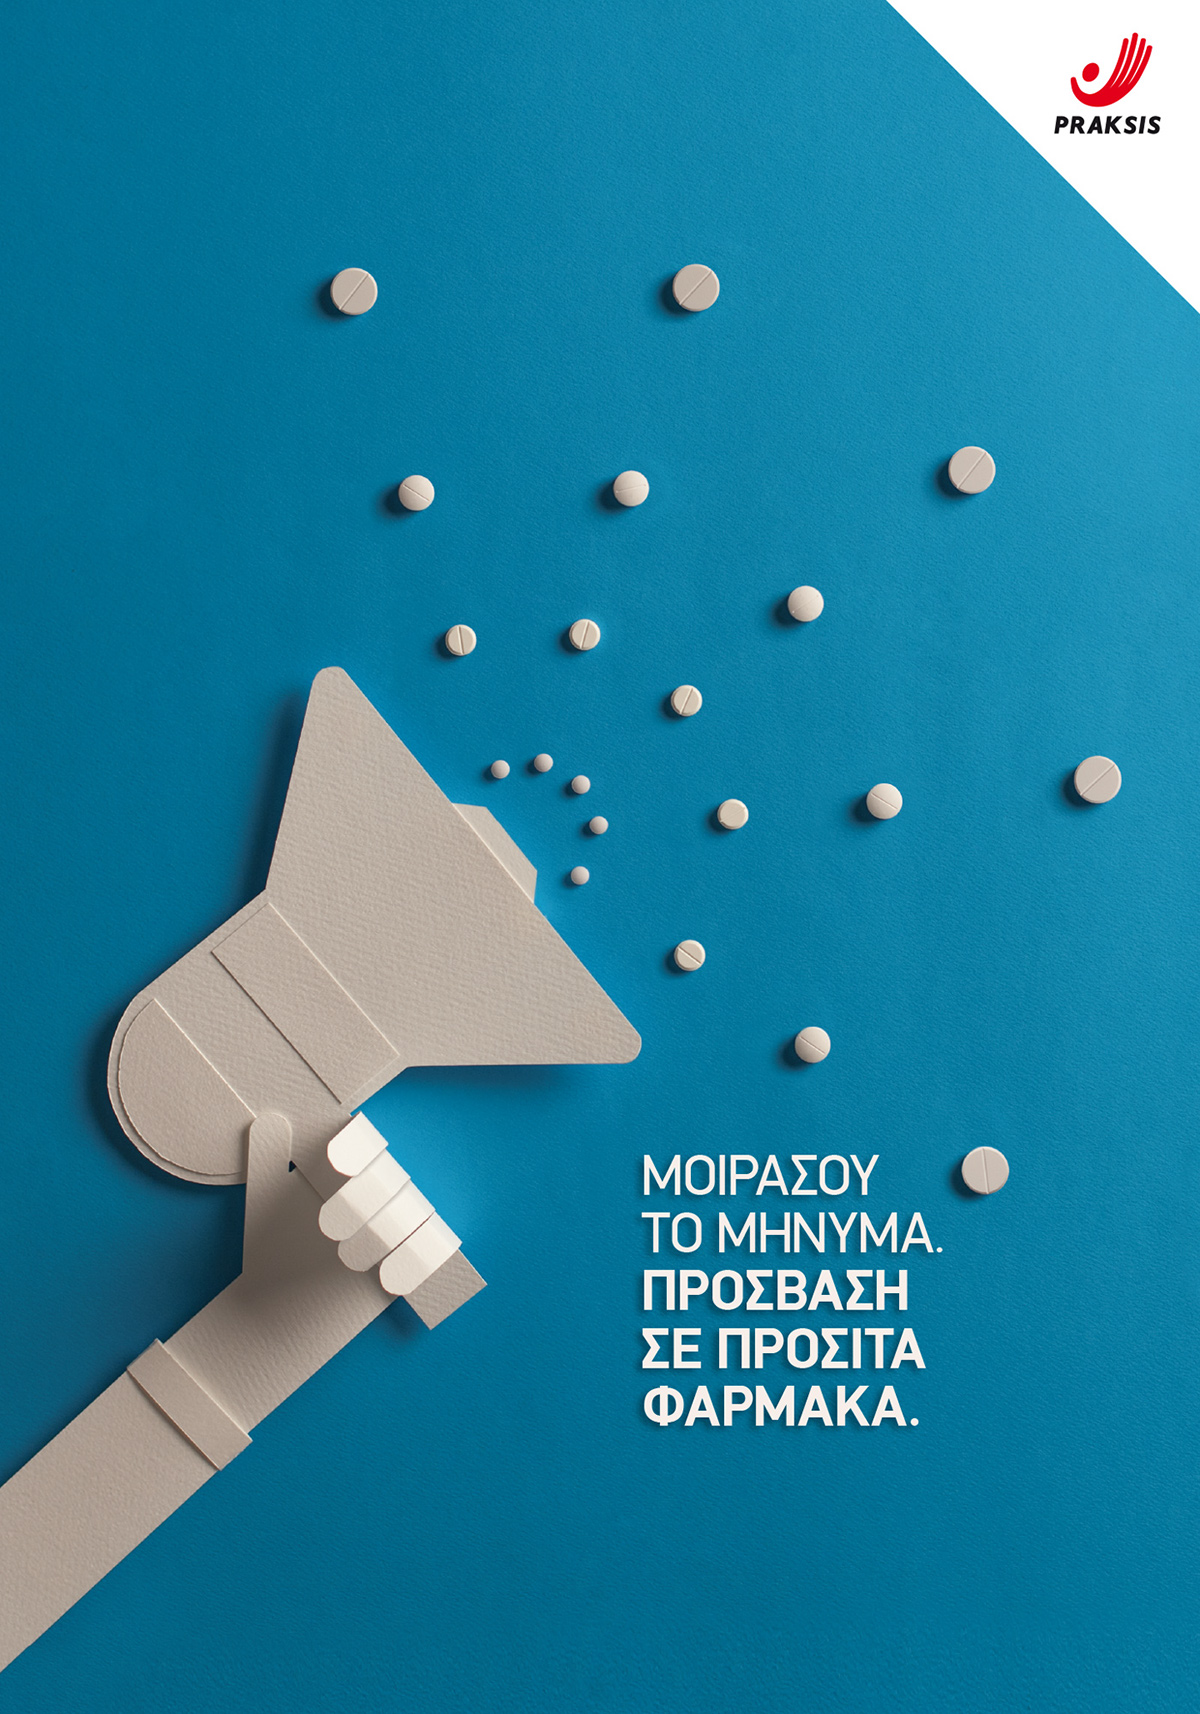 praksis social design poster social design poster Greece athens access to medicine comeback studio movieteller stop motion paper cuts Paper Illustration